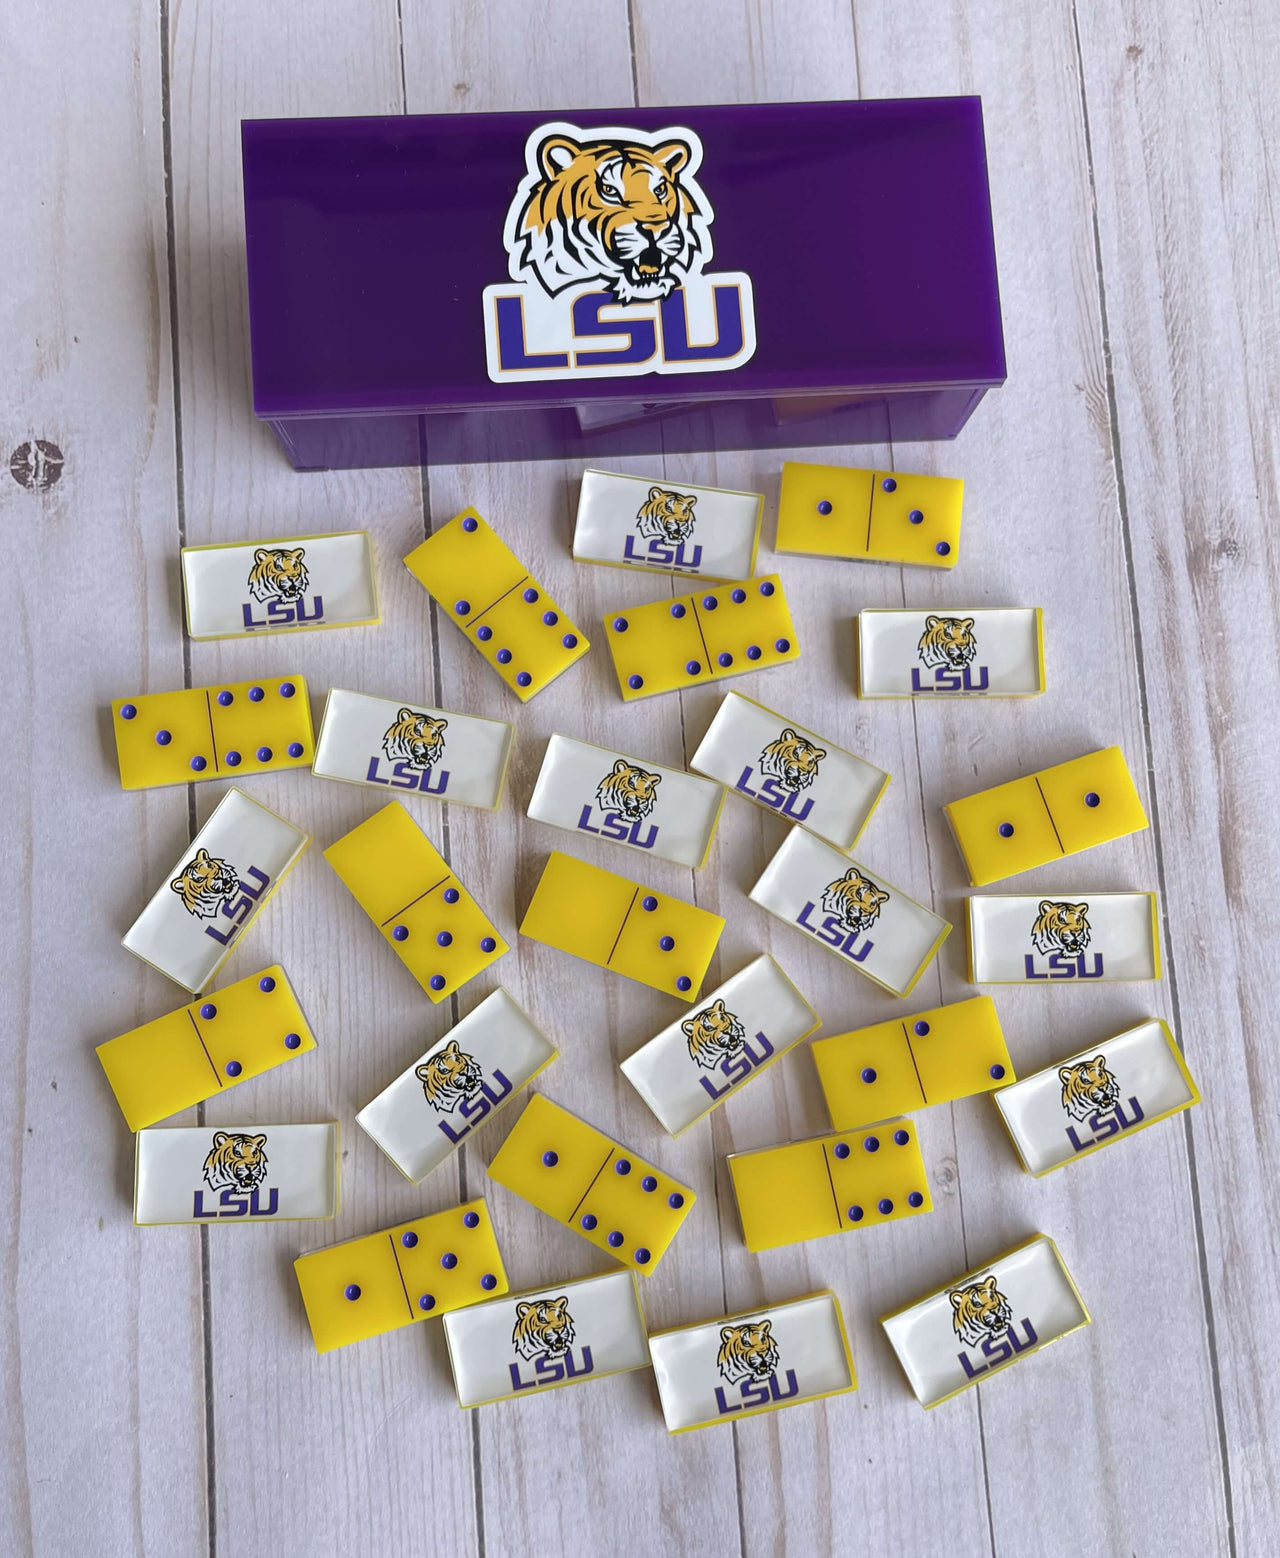 LSU Tigers Louisiana State University Dominoes Set American College Football Custom Resin Dominoes